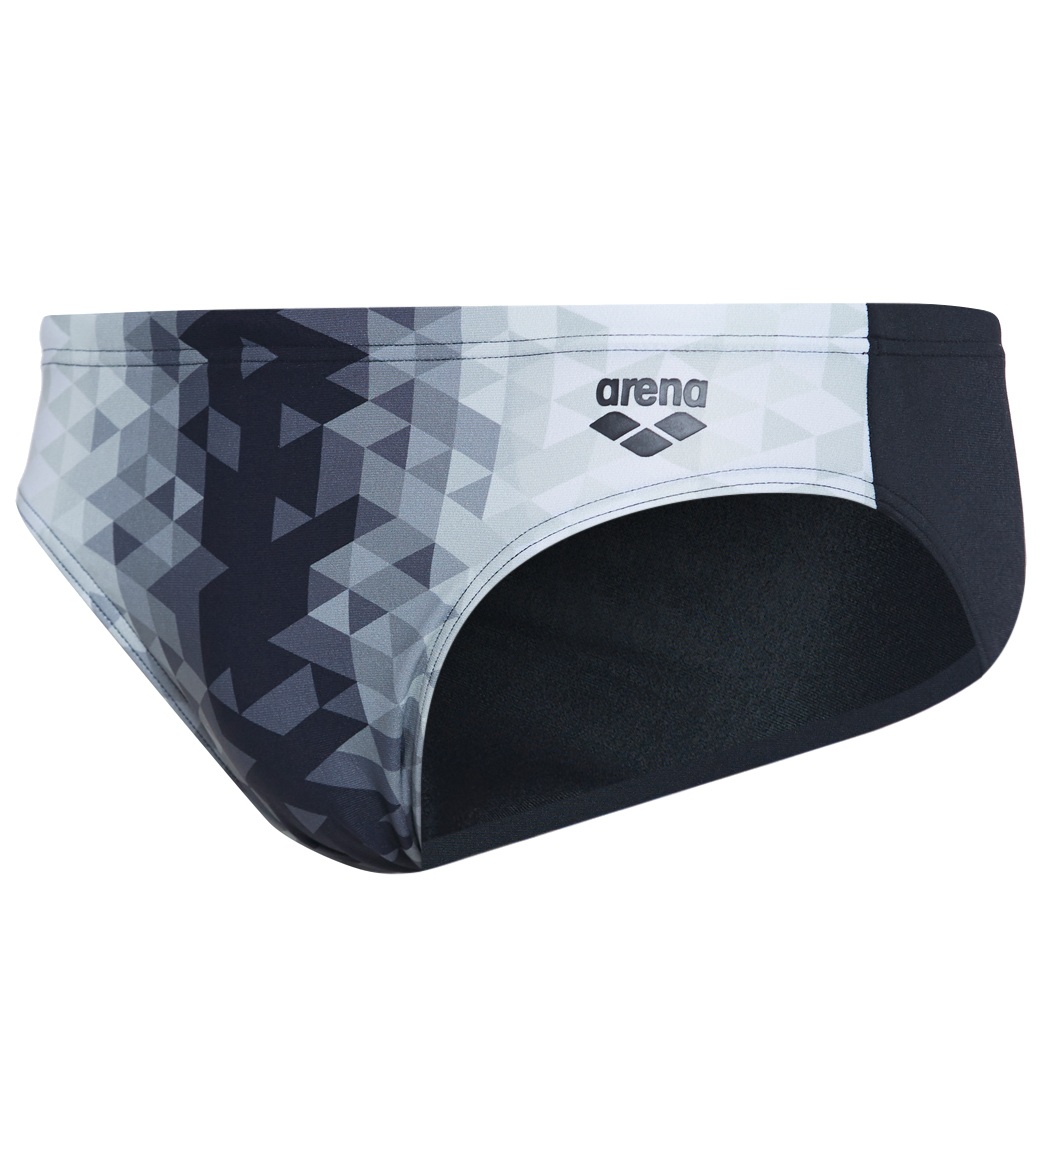 Arena Men's Triangle Prism Brief Swimsuit - Black Multi/Black 22 Polyester - Swimoutlet.com